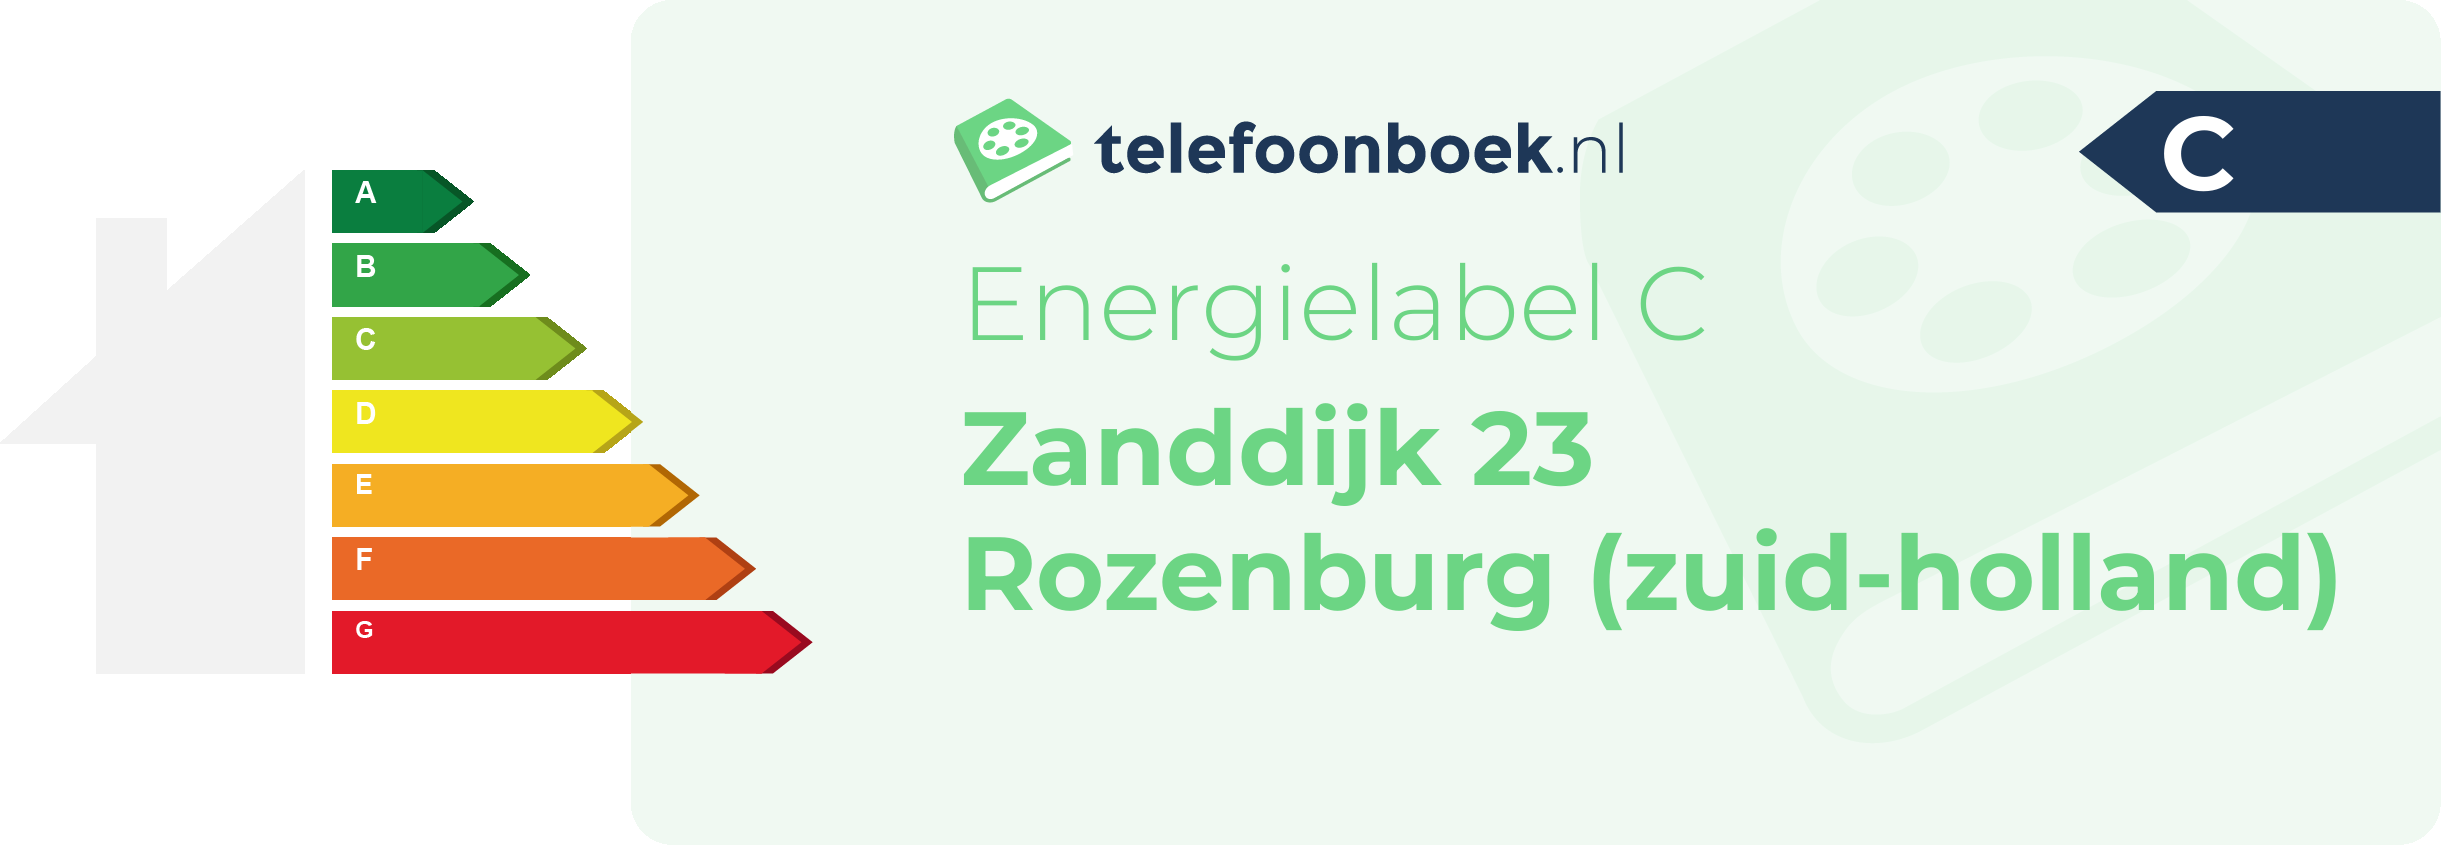 Energielabel Zanddijk 23 Rozenburg (Zuid-Holland)